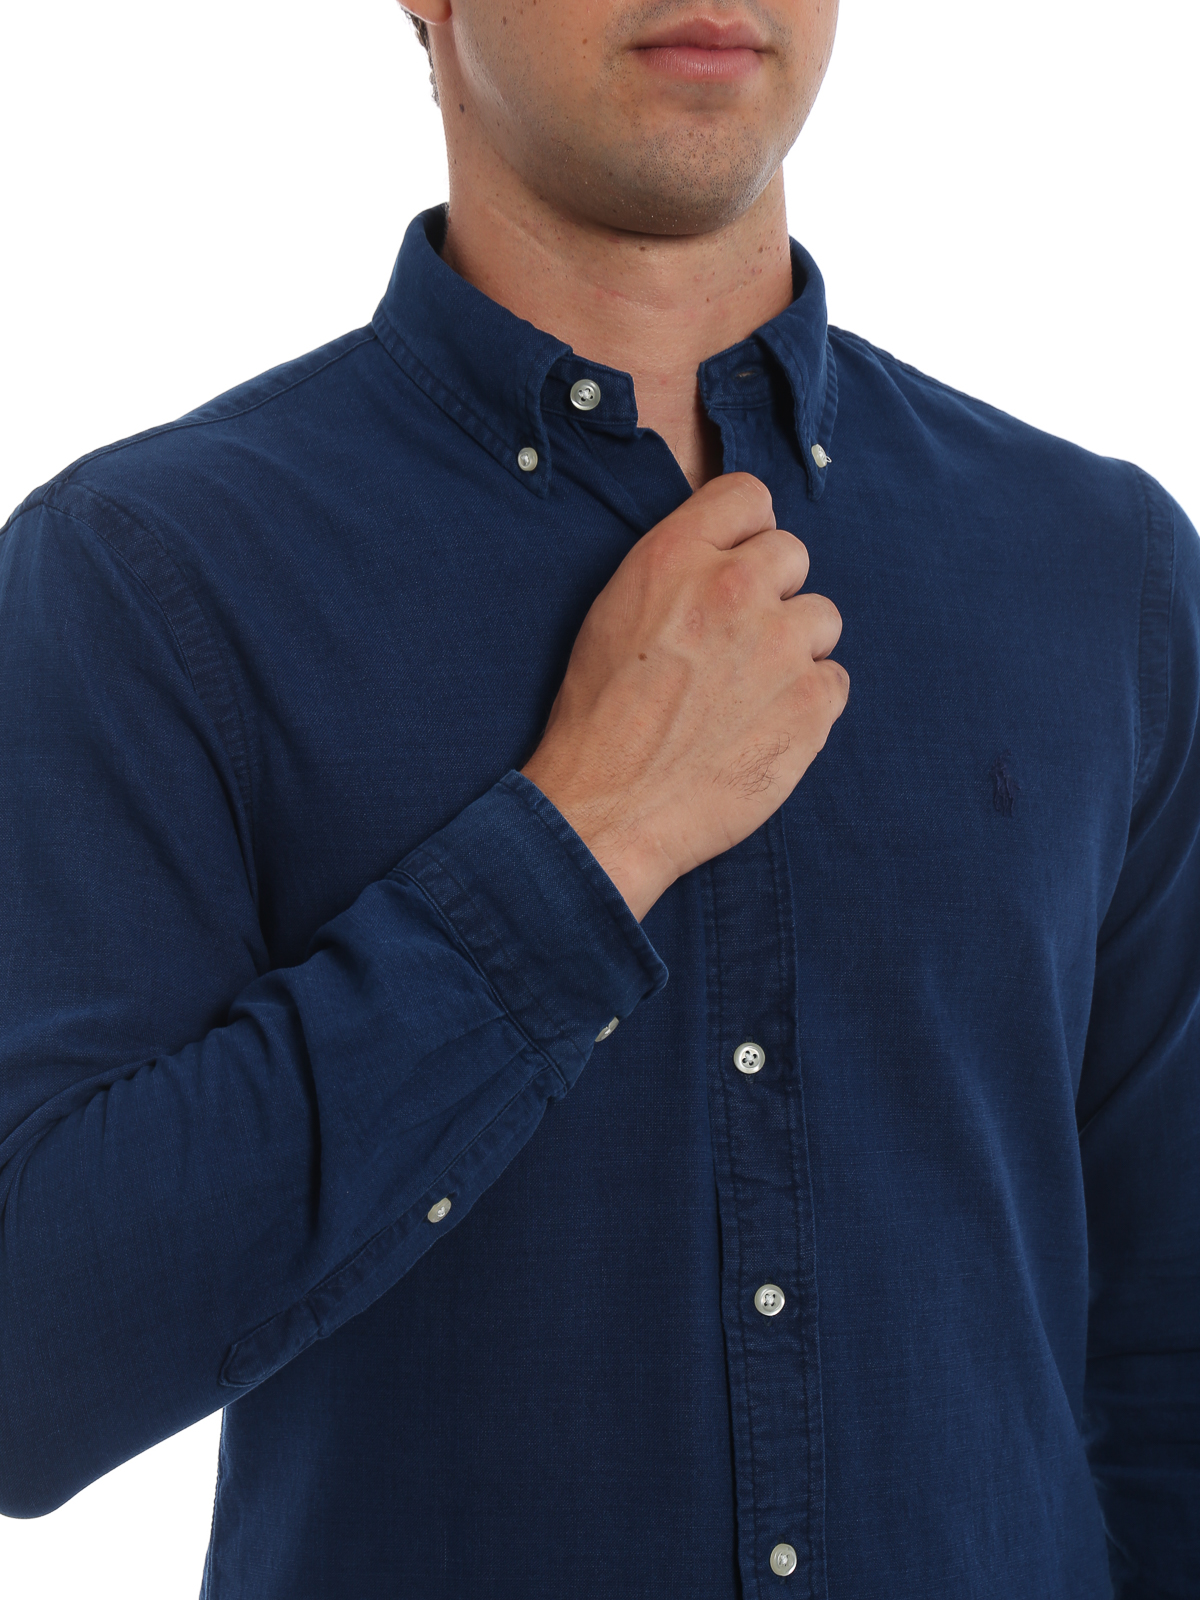 Shirts Polo Ralph Lauren - Indigo Oxford slim fit button-down shirt -  710723610001